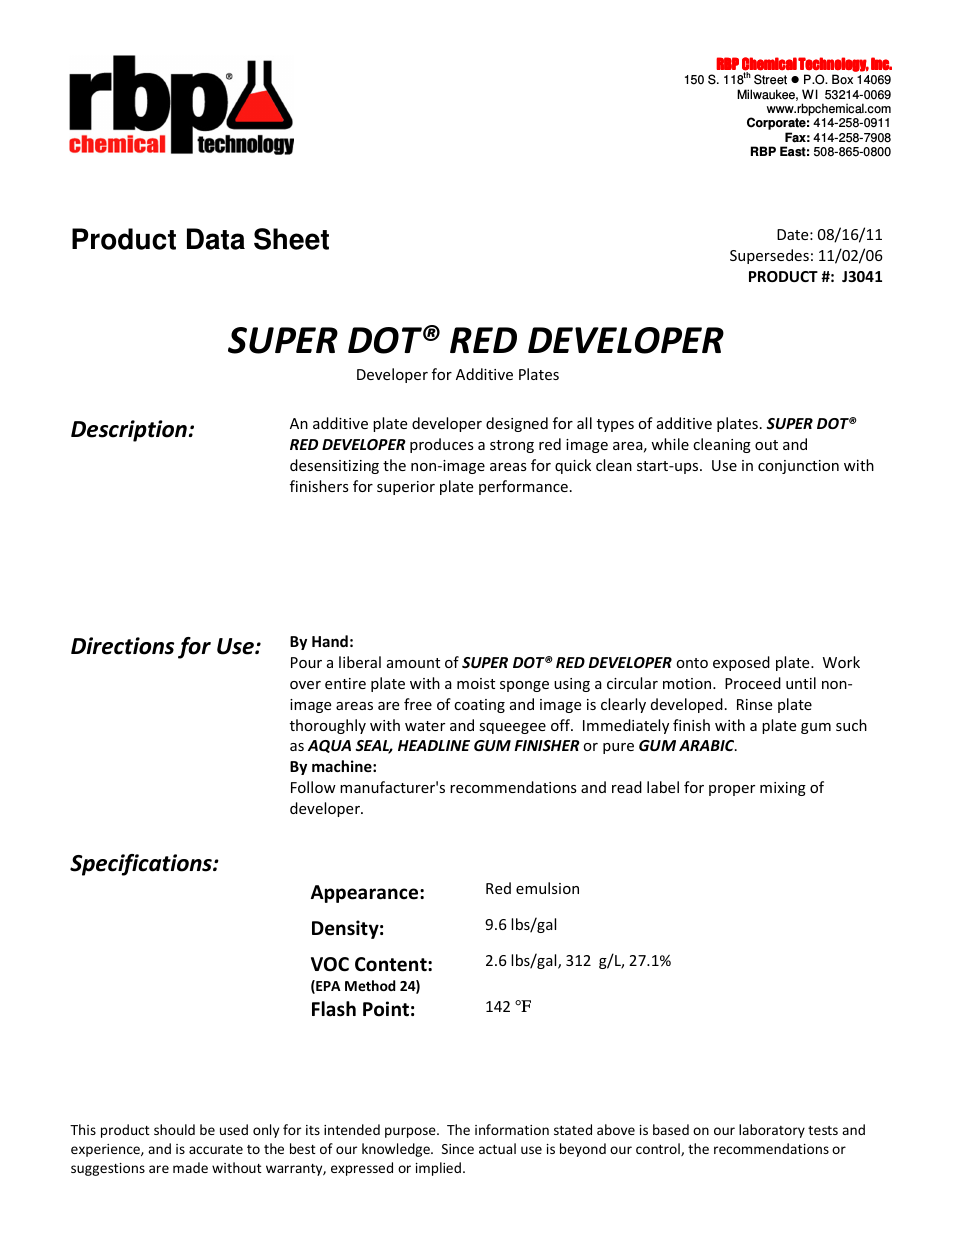 J3041 SUPER DOT RED DEVELOPER